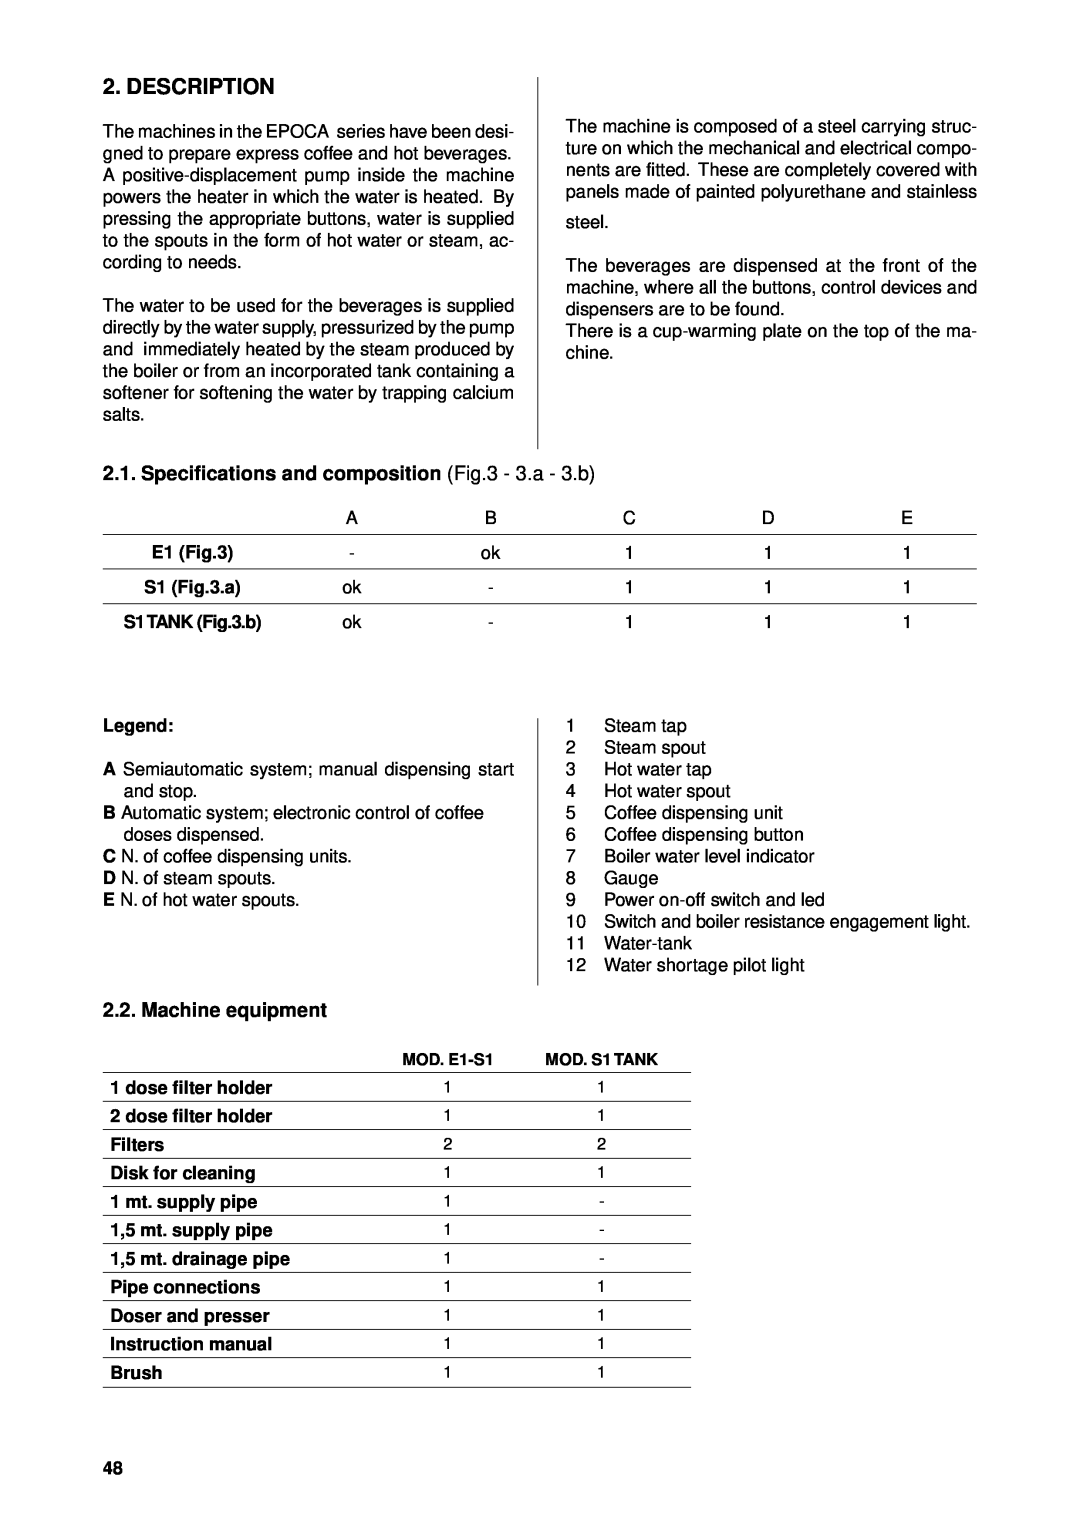 Rancilio S1 TANK, E1 manual Description, Specifications and composition - 3.a - 3.b, Machine equipment 